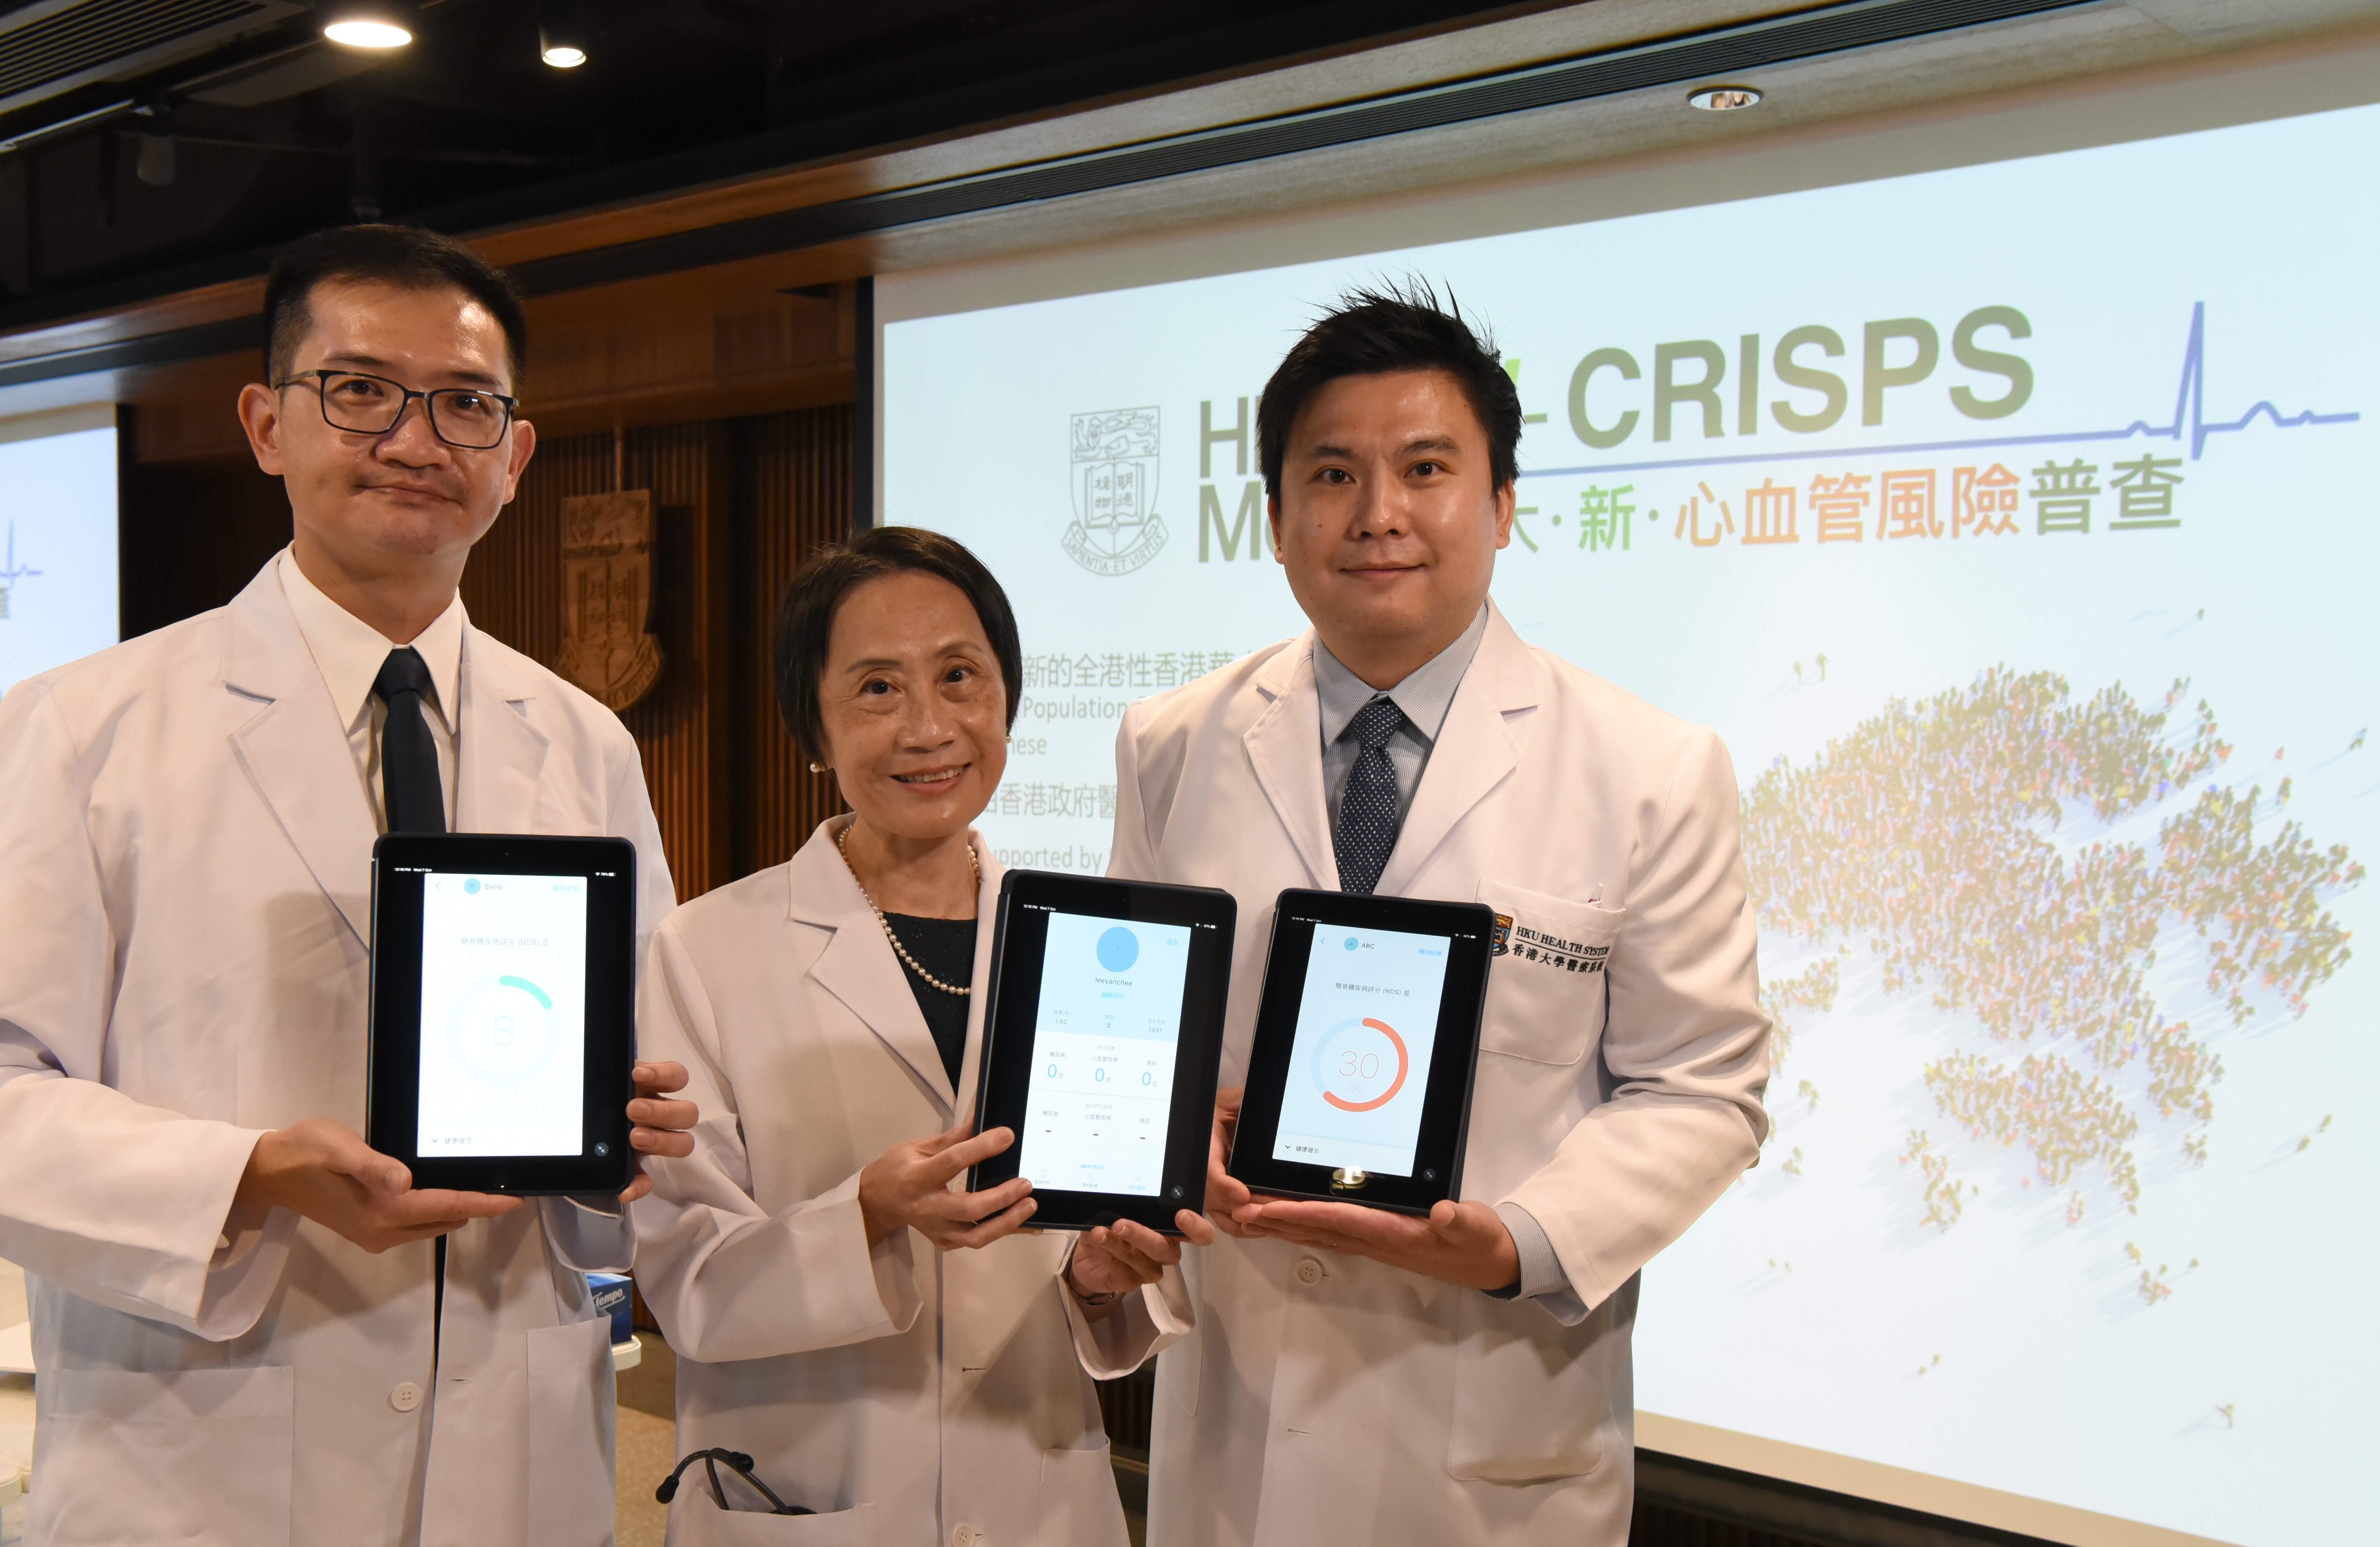 Group photo of HKUMed researchers who lead the N-CRISPS study: Professor Karen Lam, Dr Woo Yu-cho, and Dr Paul Lee.